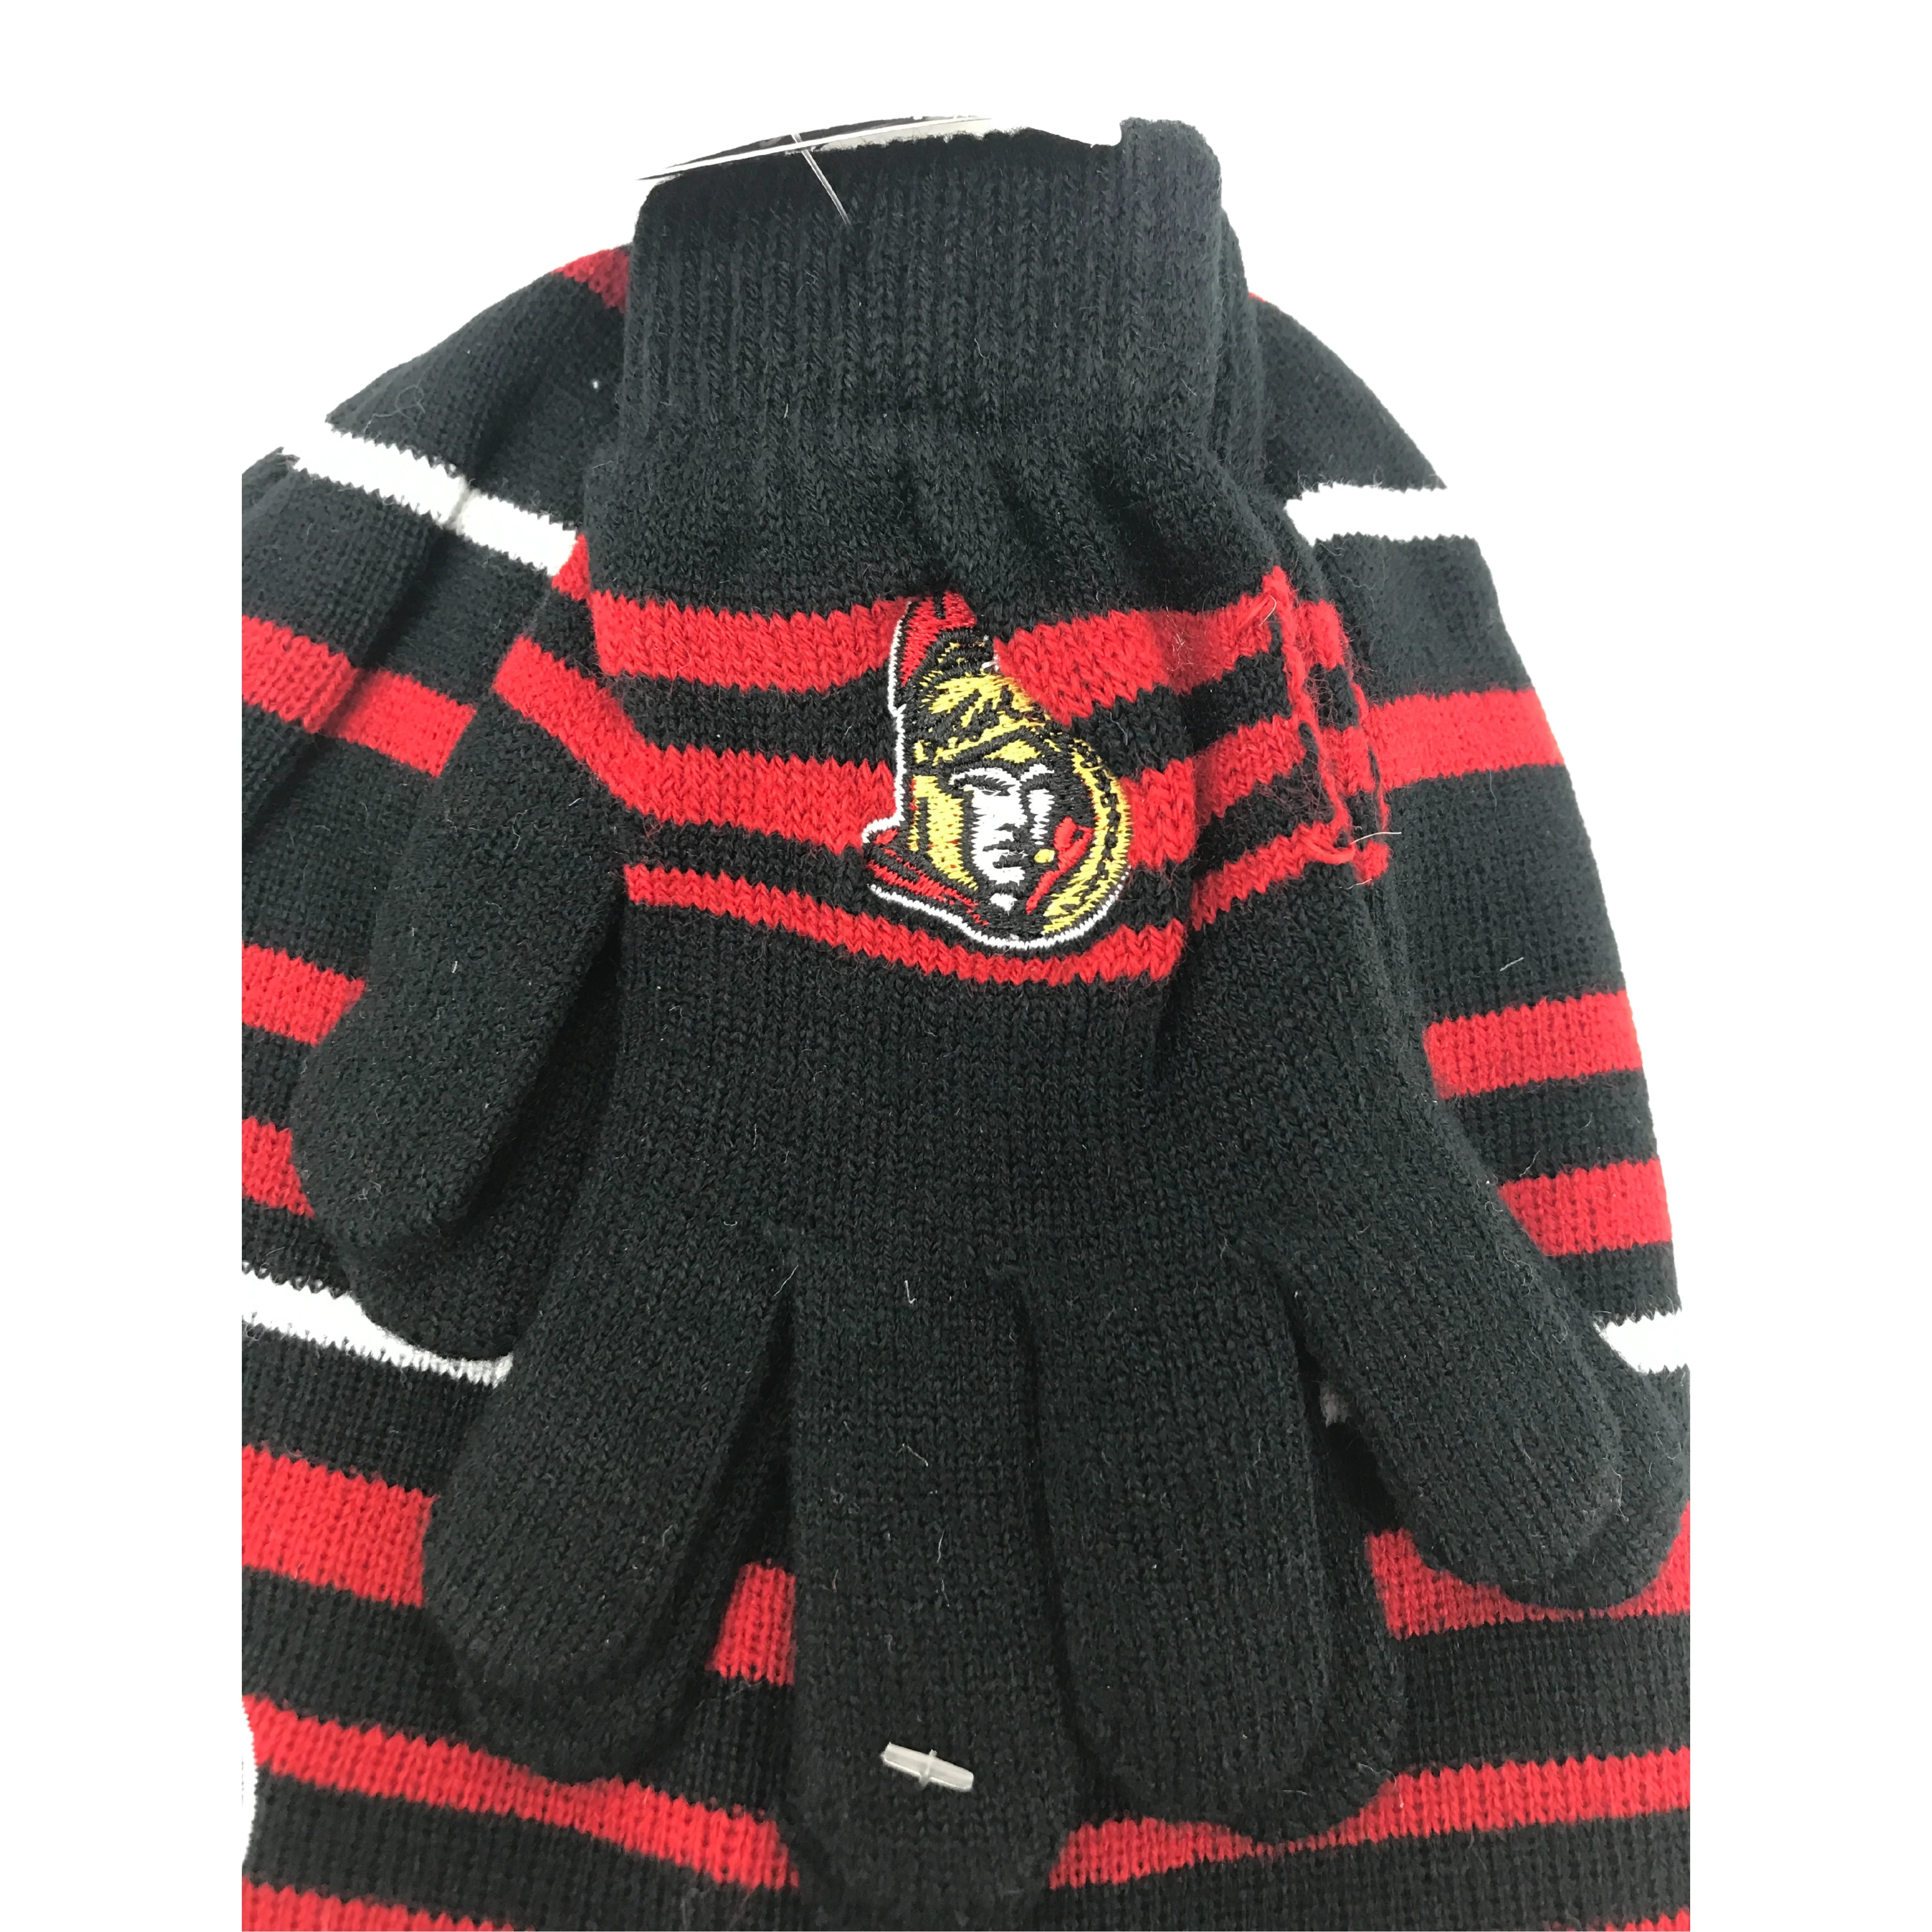 Ottawa Senators Hat and Glove Set / Size 8-16 / Red & Black / NHL Winter Gear /